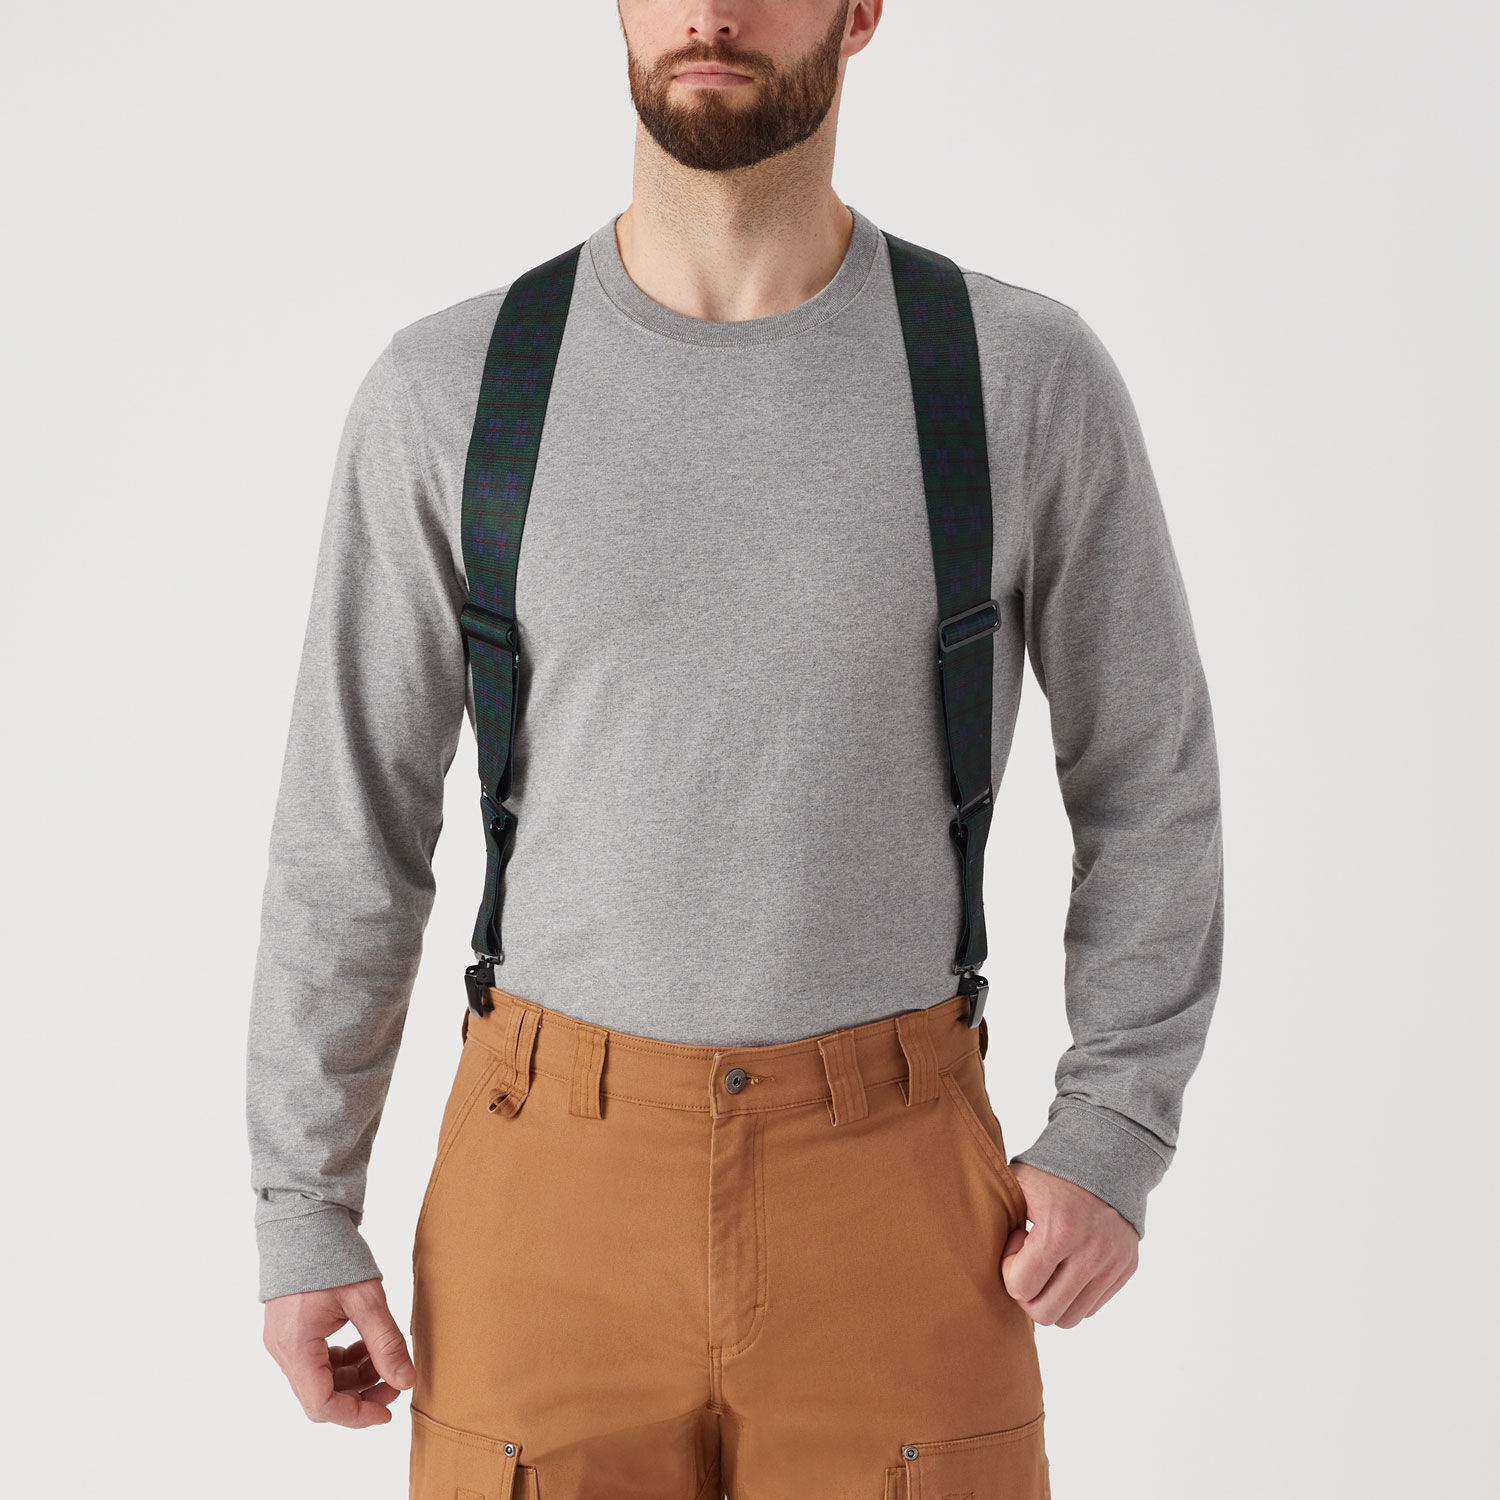 Source High street suspender pants mens jumpsuit denim bib overalls men on  m.alibaba.com